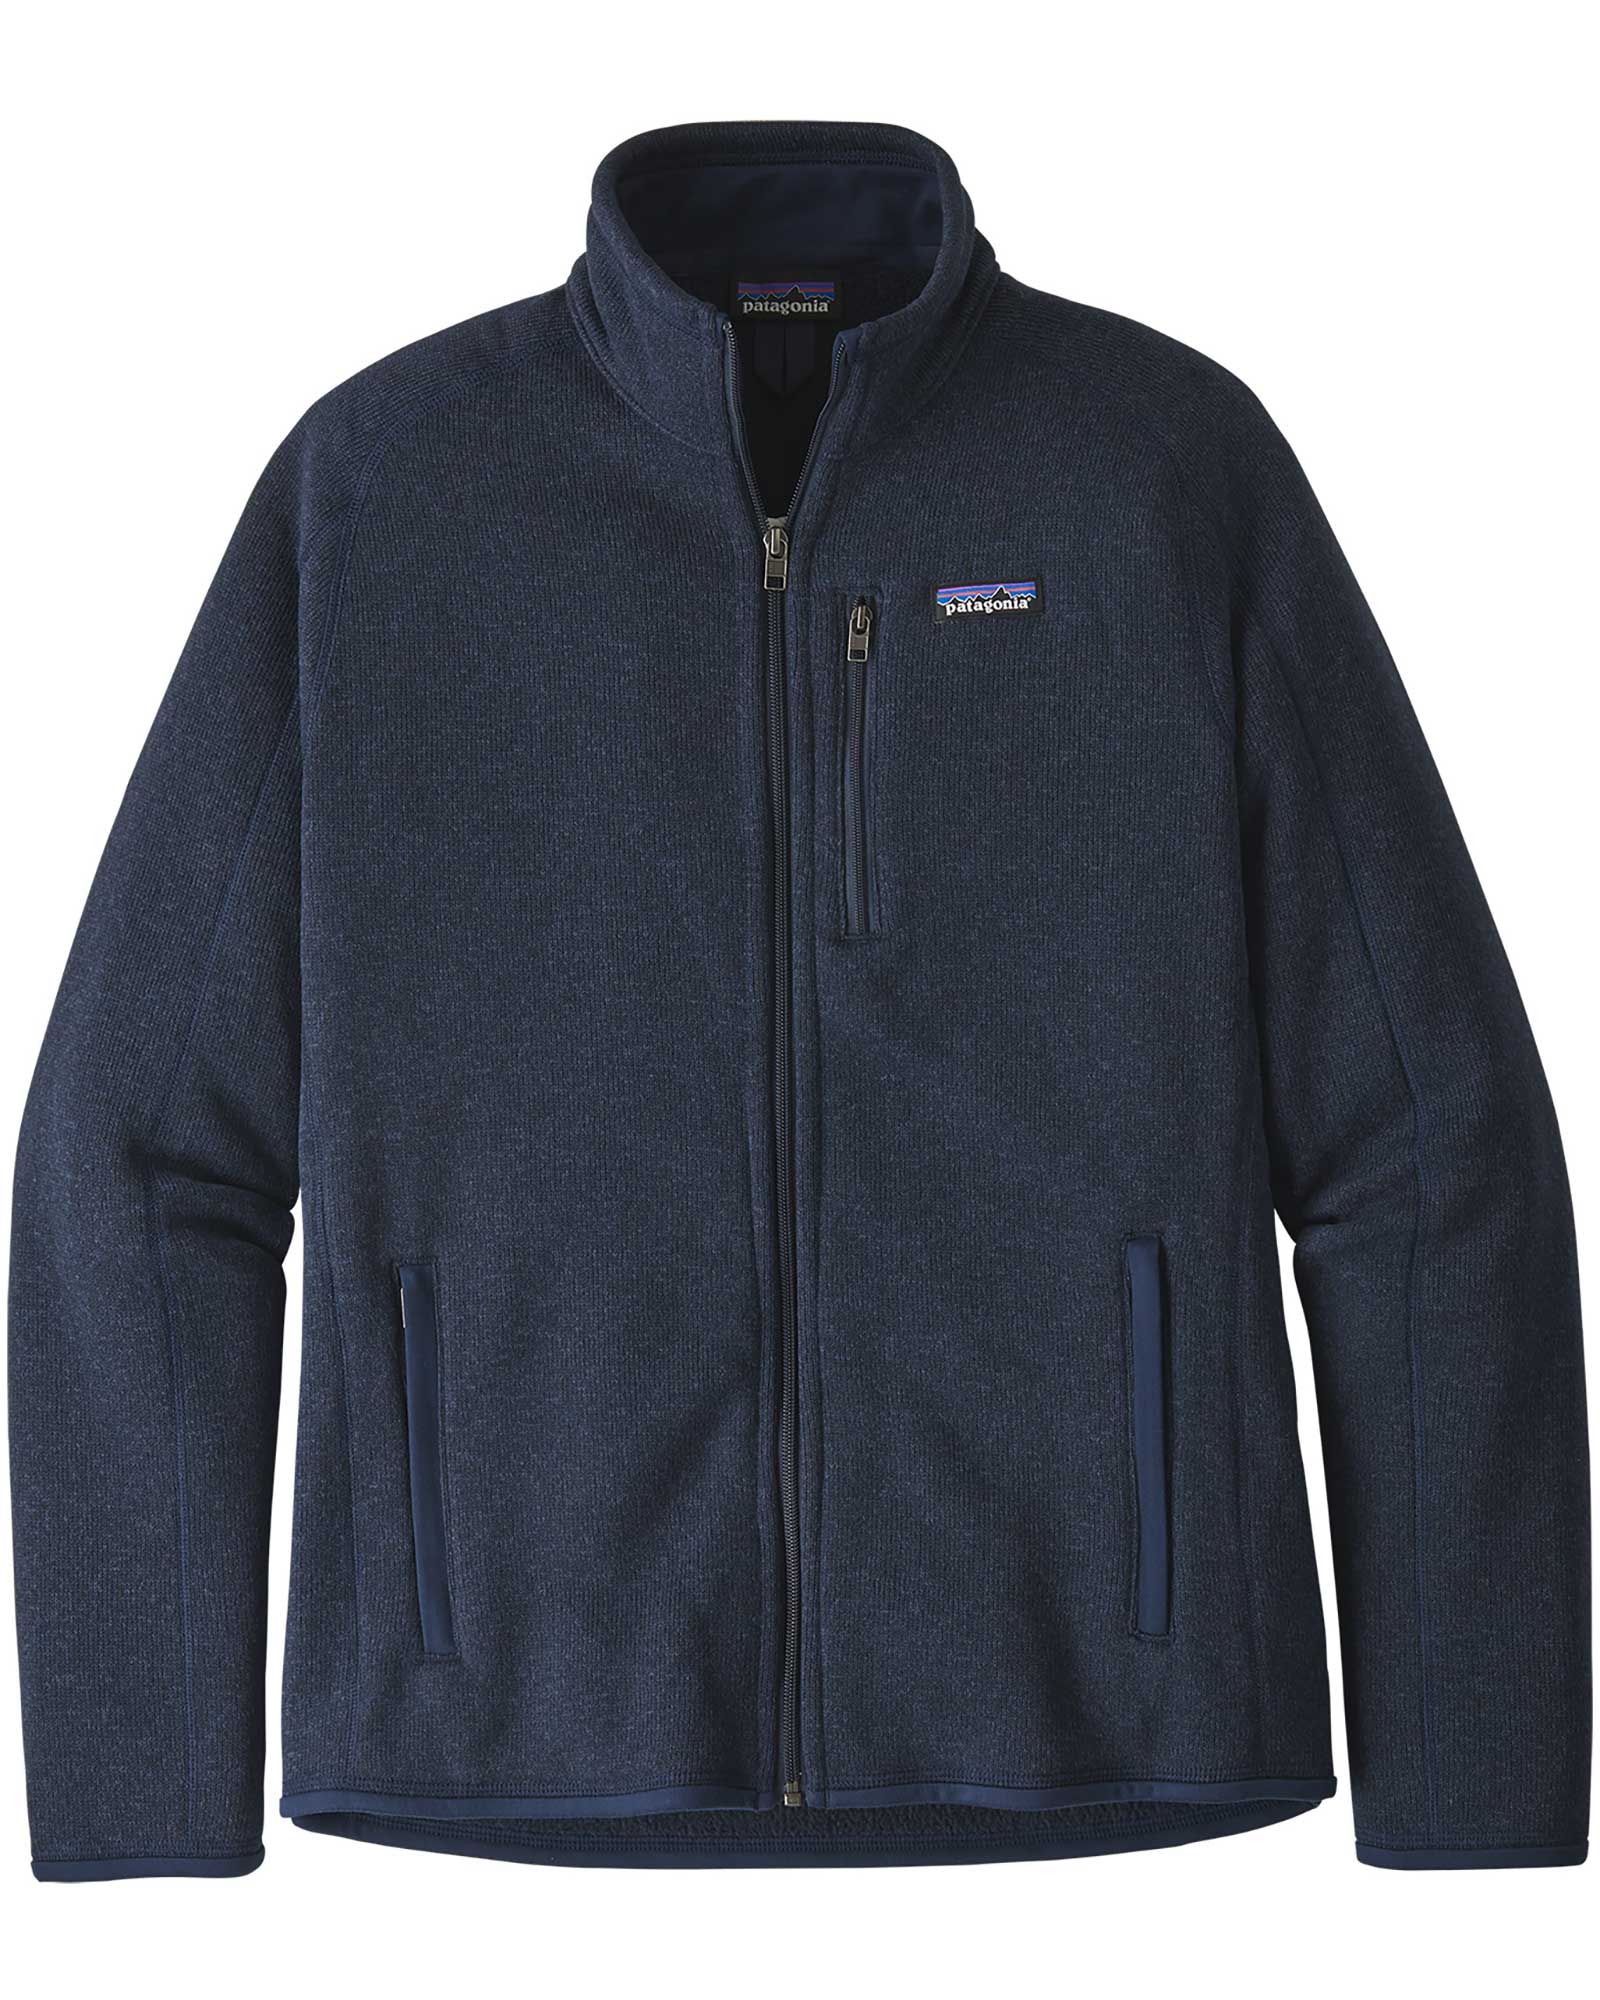 Patagonia Better Sweater Men’s Jacket - New Navy M